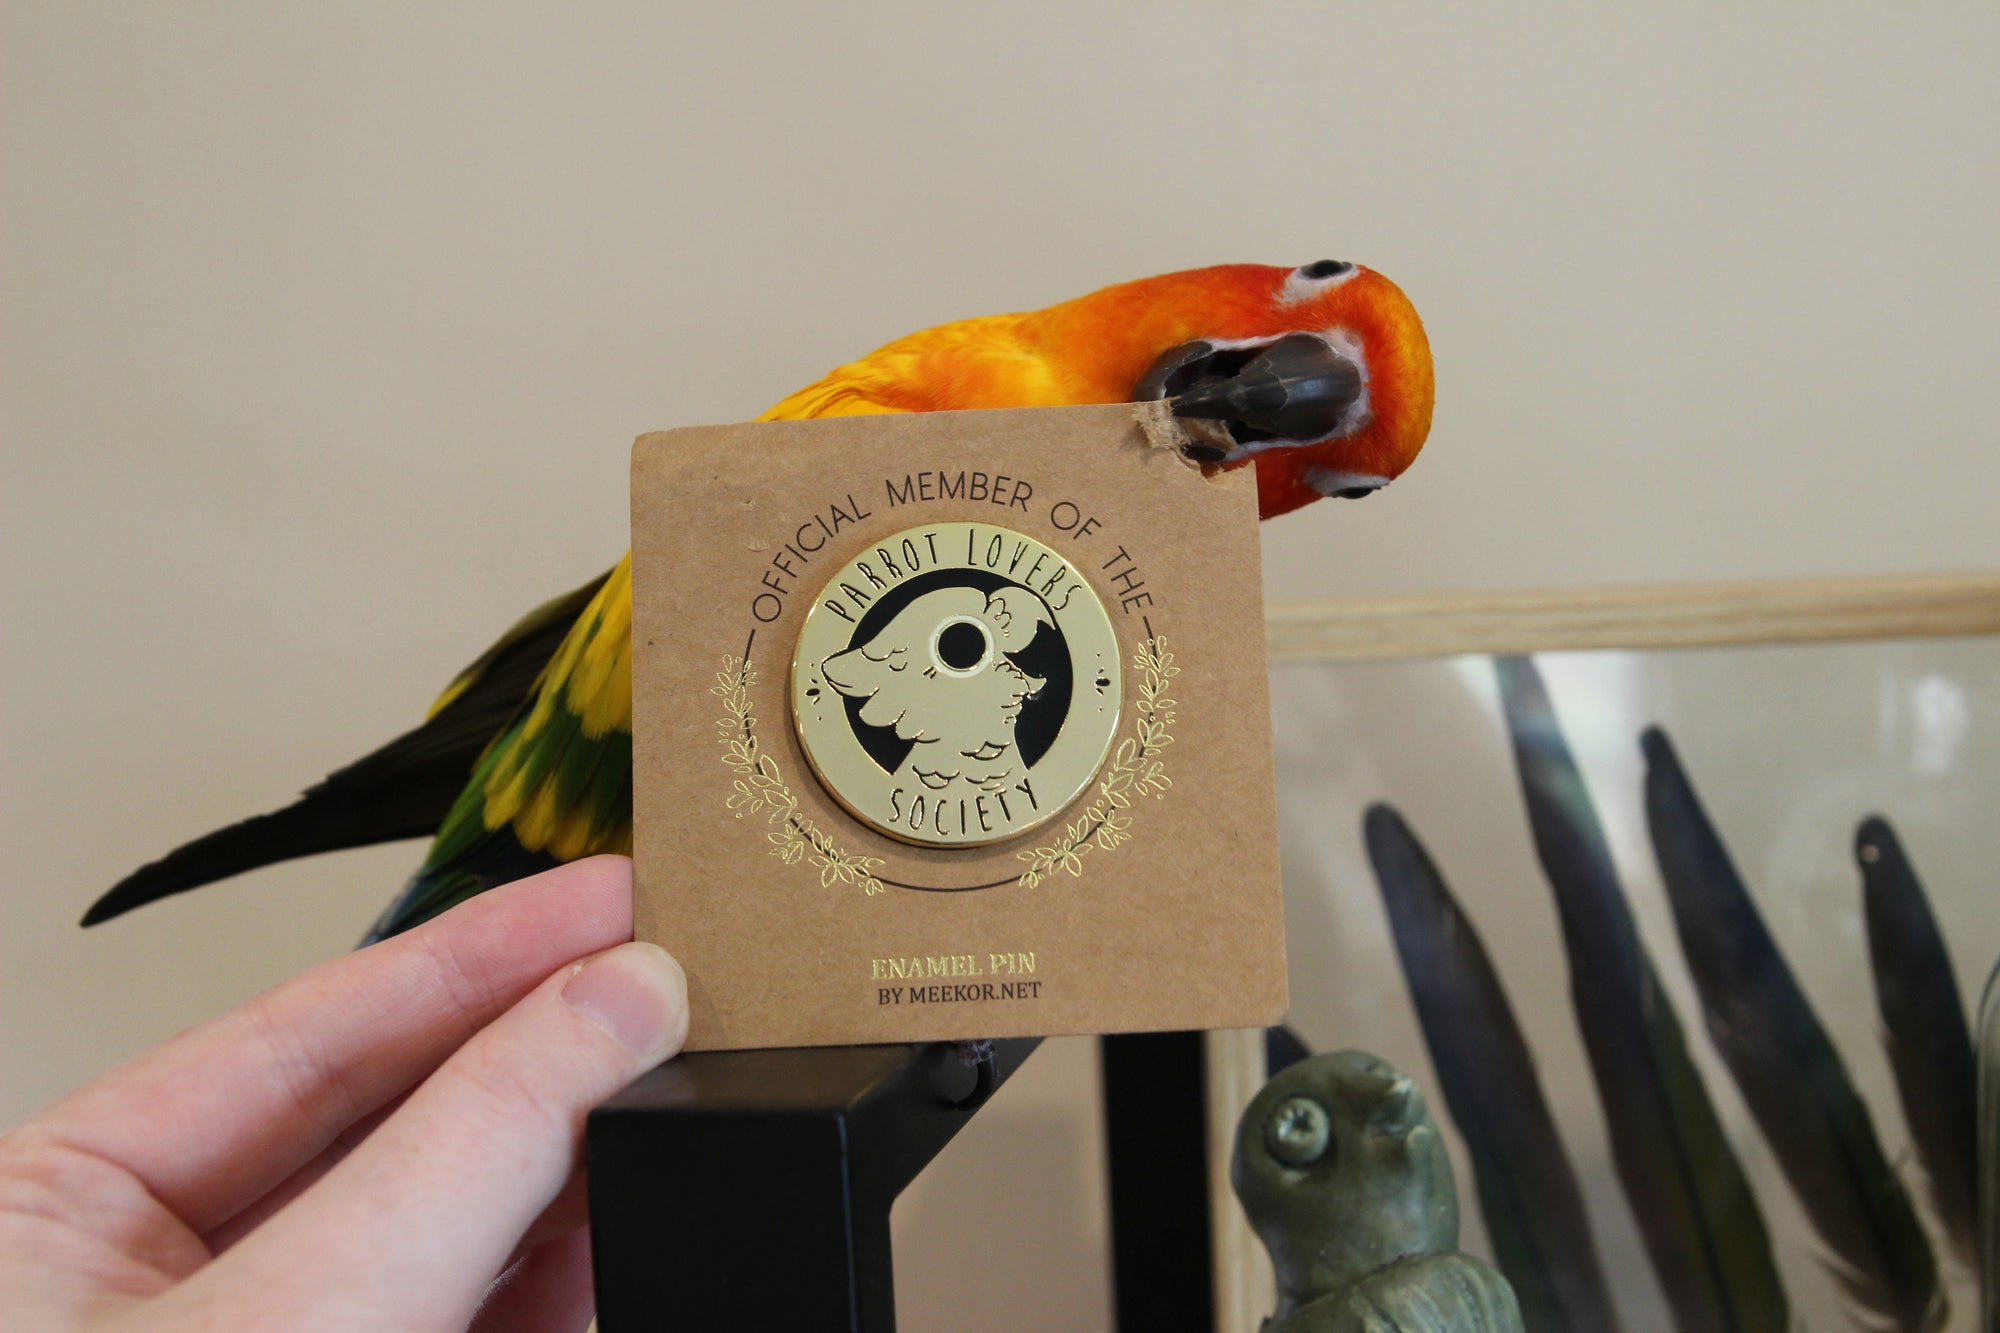 Parrot Lovers Society Pin